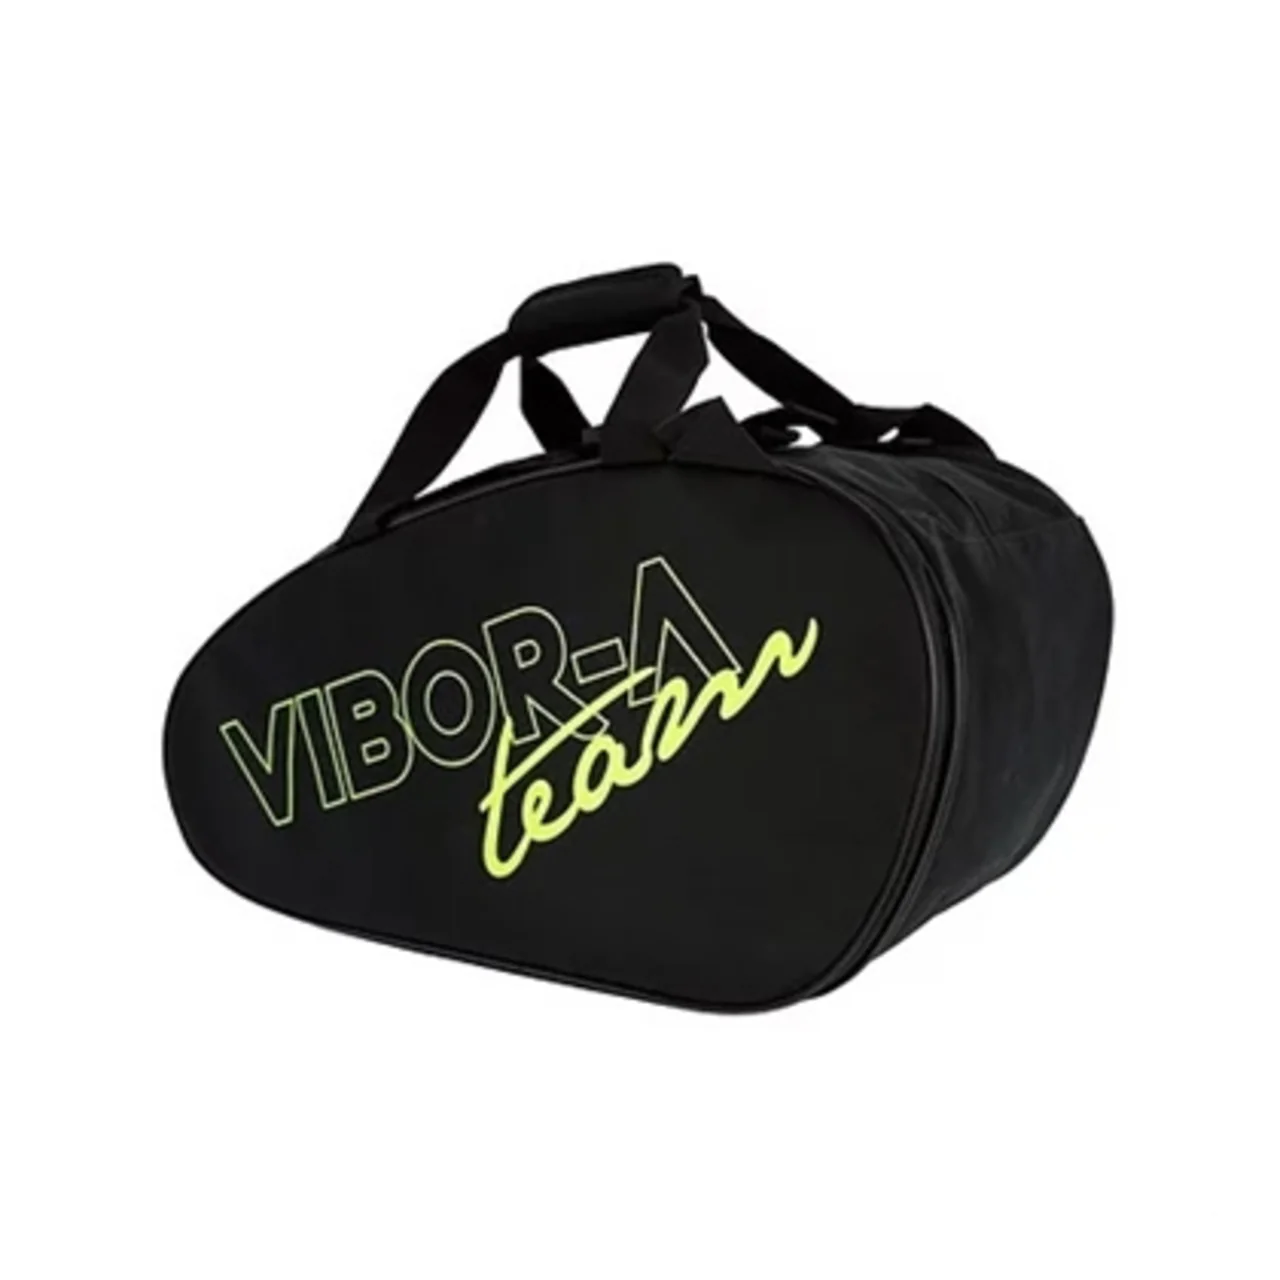 Vibor-A Racket Bag Club Yellow